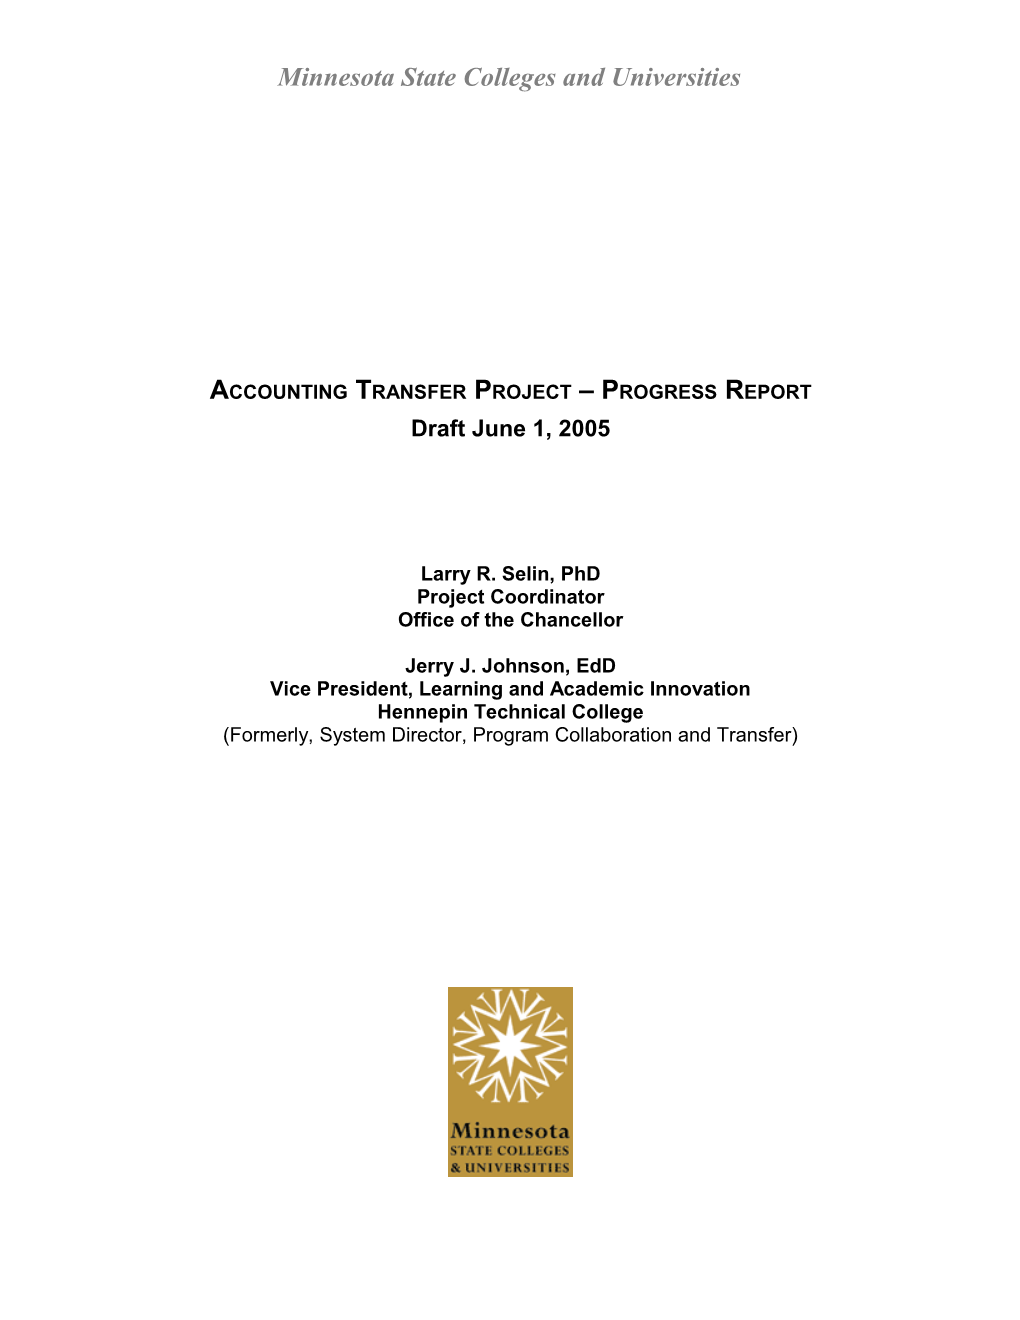 Accounting Transfer Project Progress Report-Draft 6/1/05